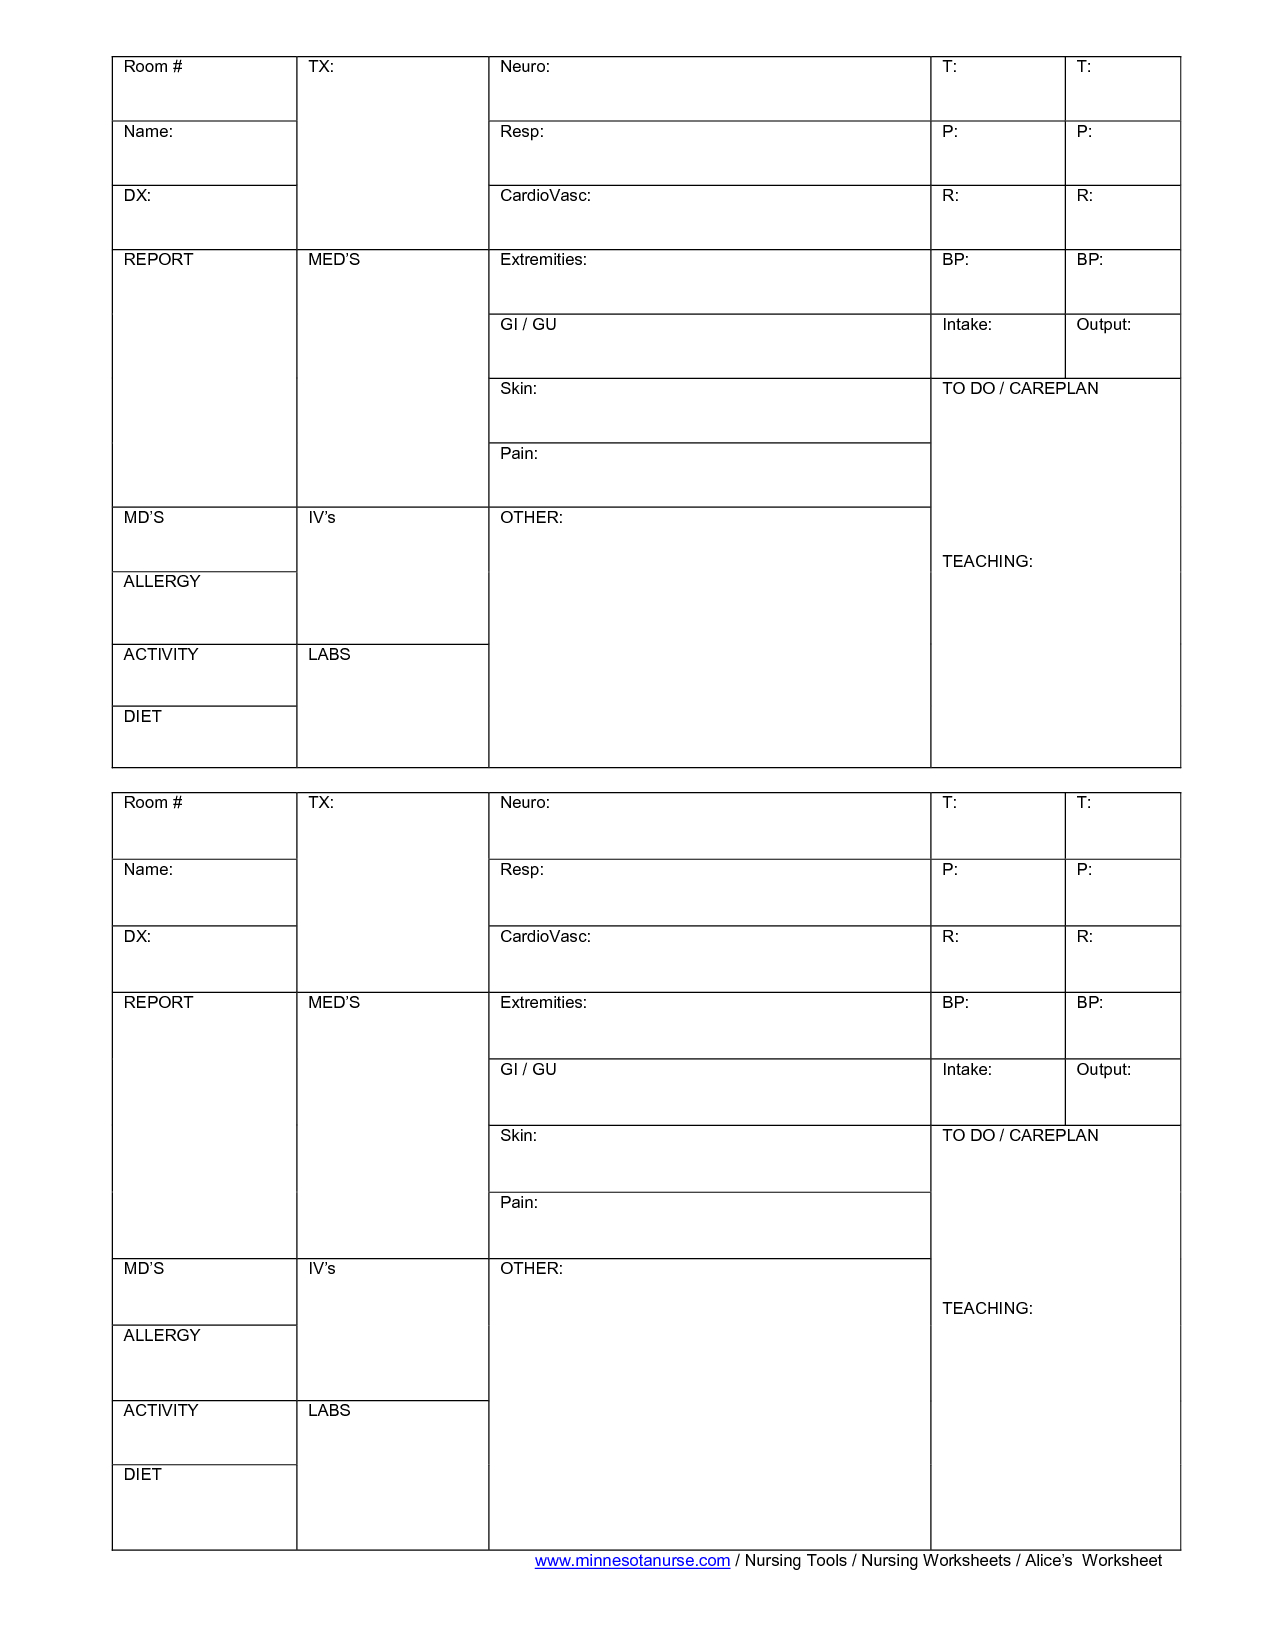 Blank Nursing Report Sheets For Newborns | Nursing Patient With Regard To Nursing Report Sheet Templates